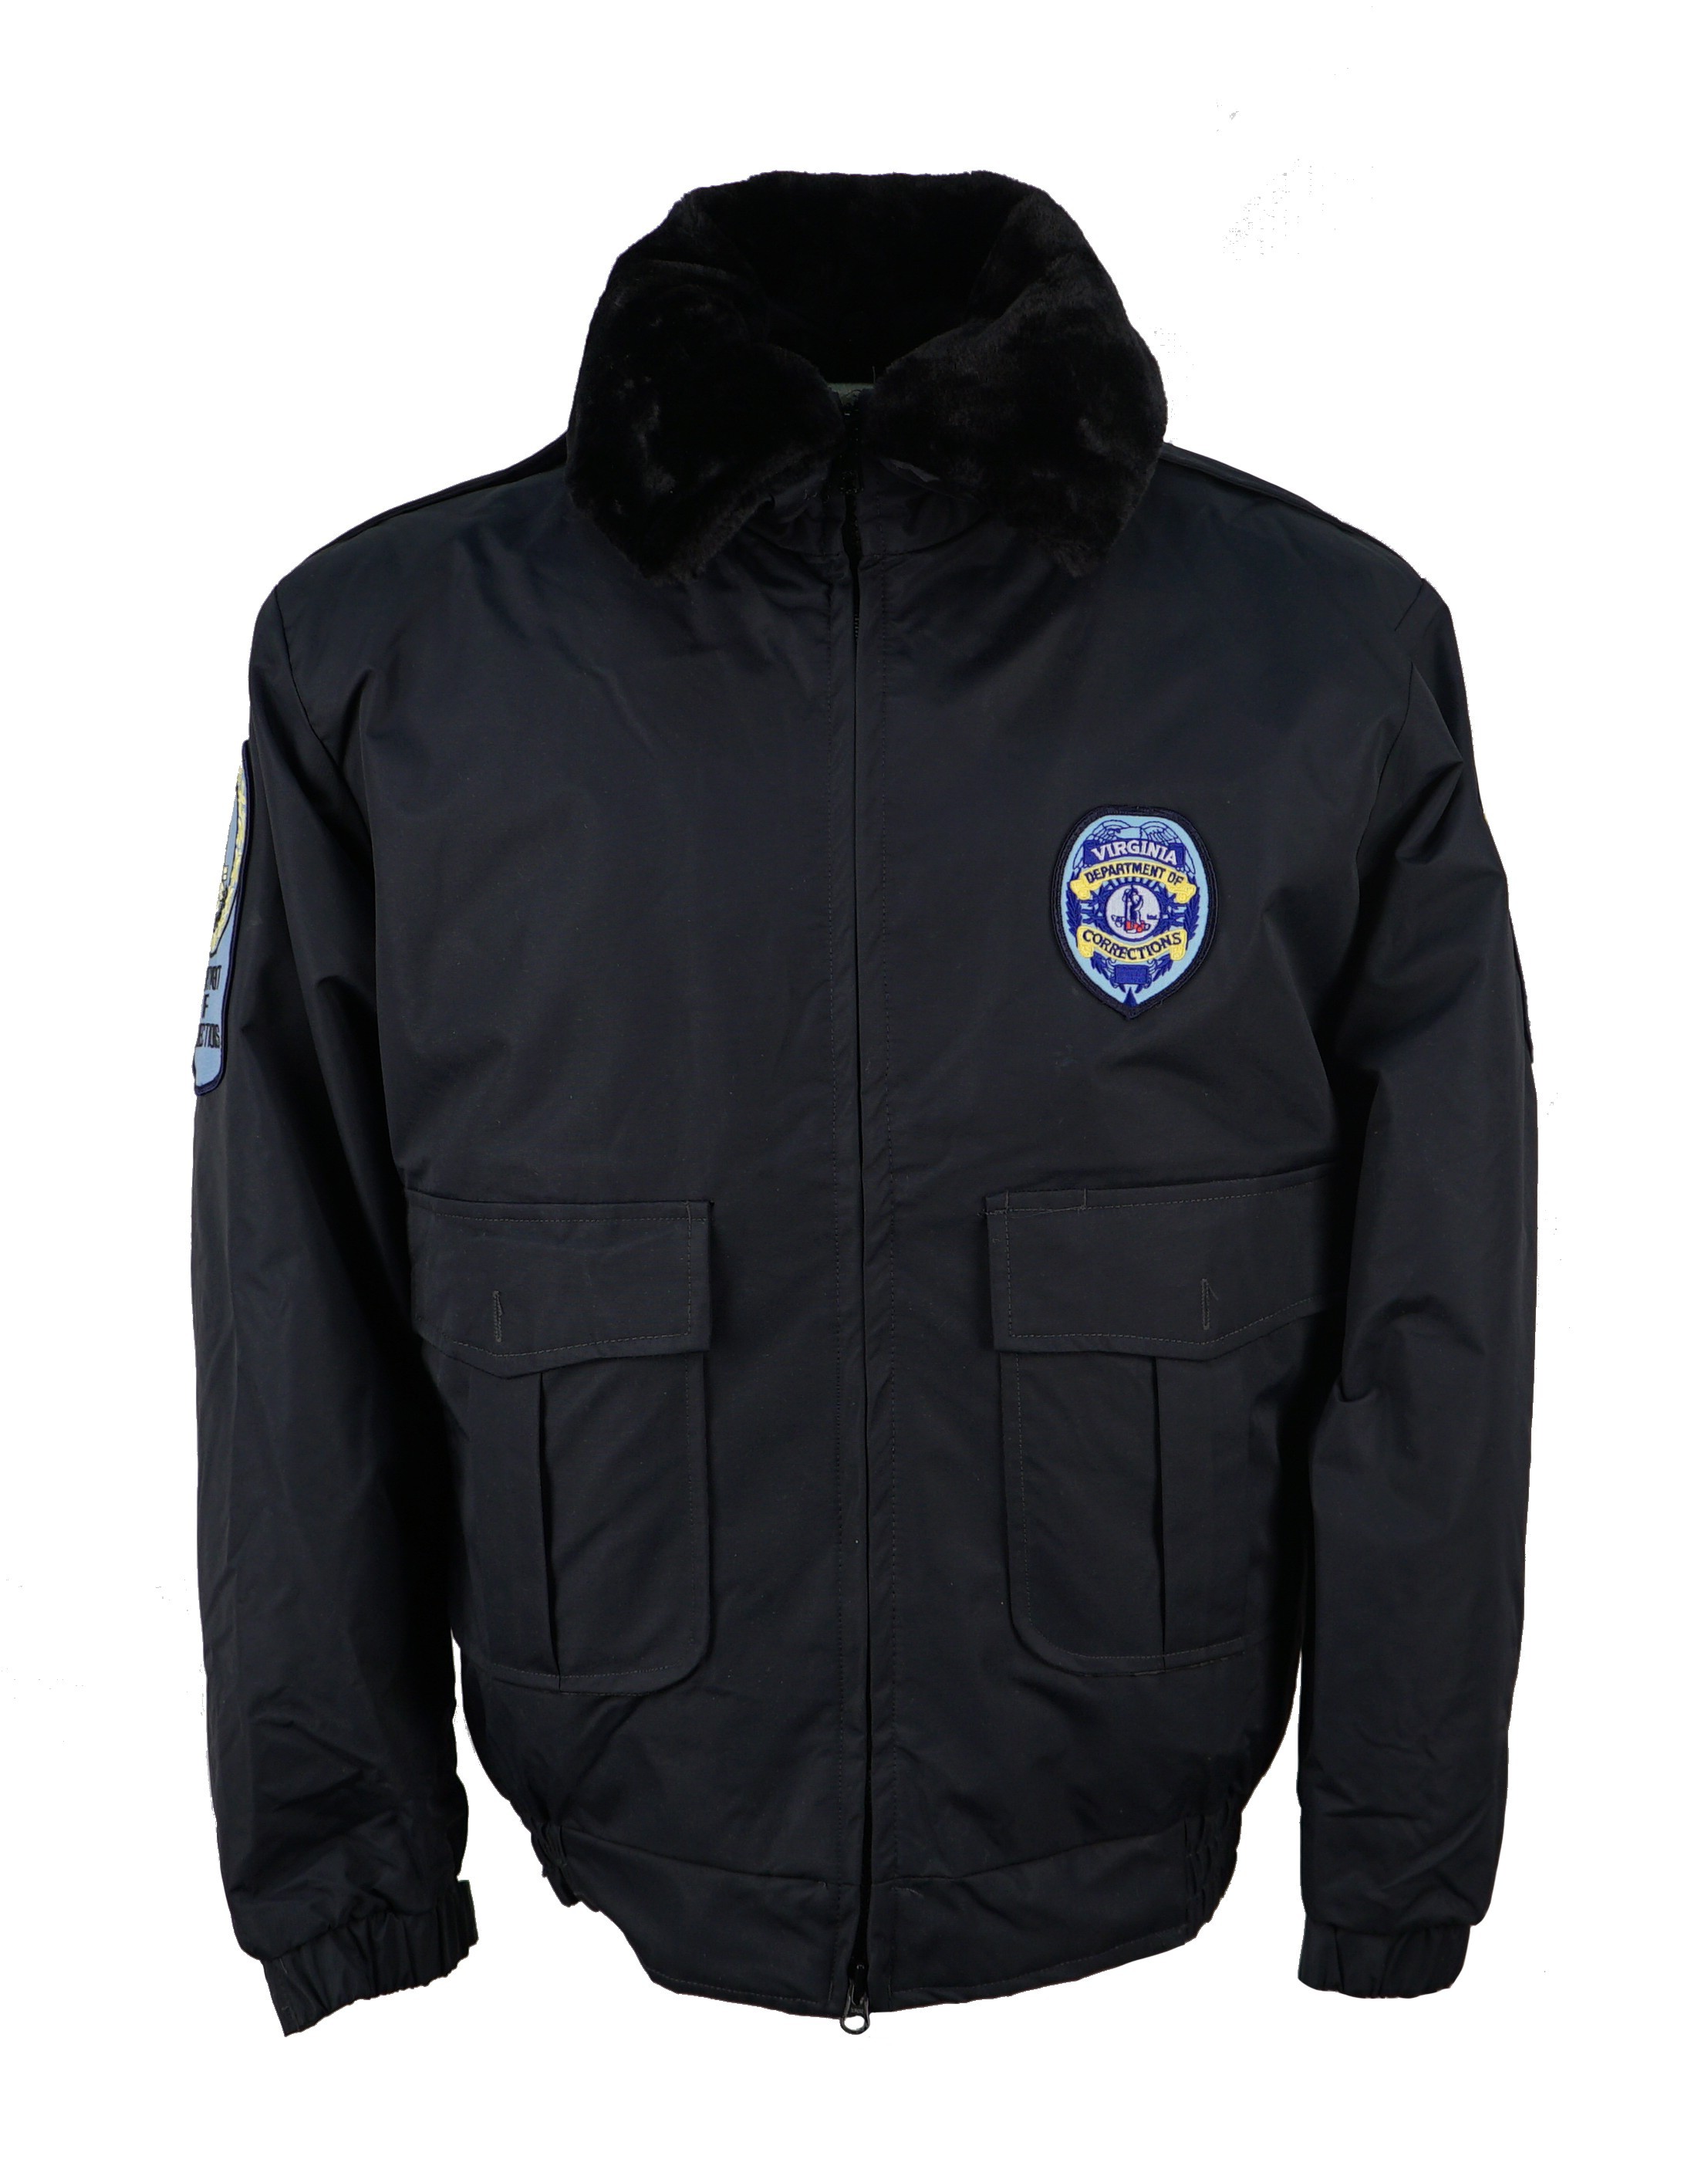 Title DOC Tact Squad Jacket | Virginia Correctional Enterprises